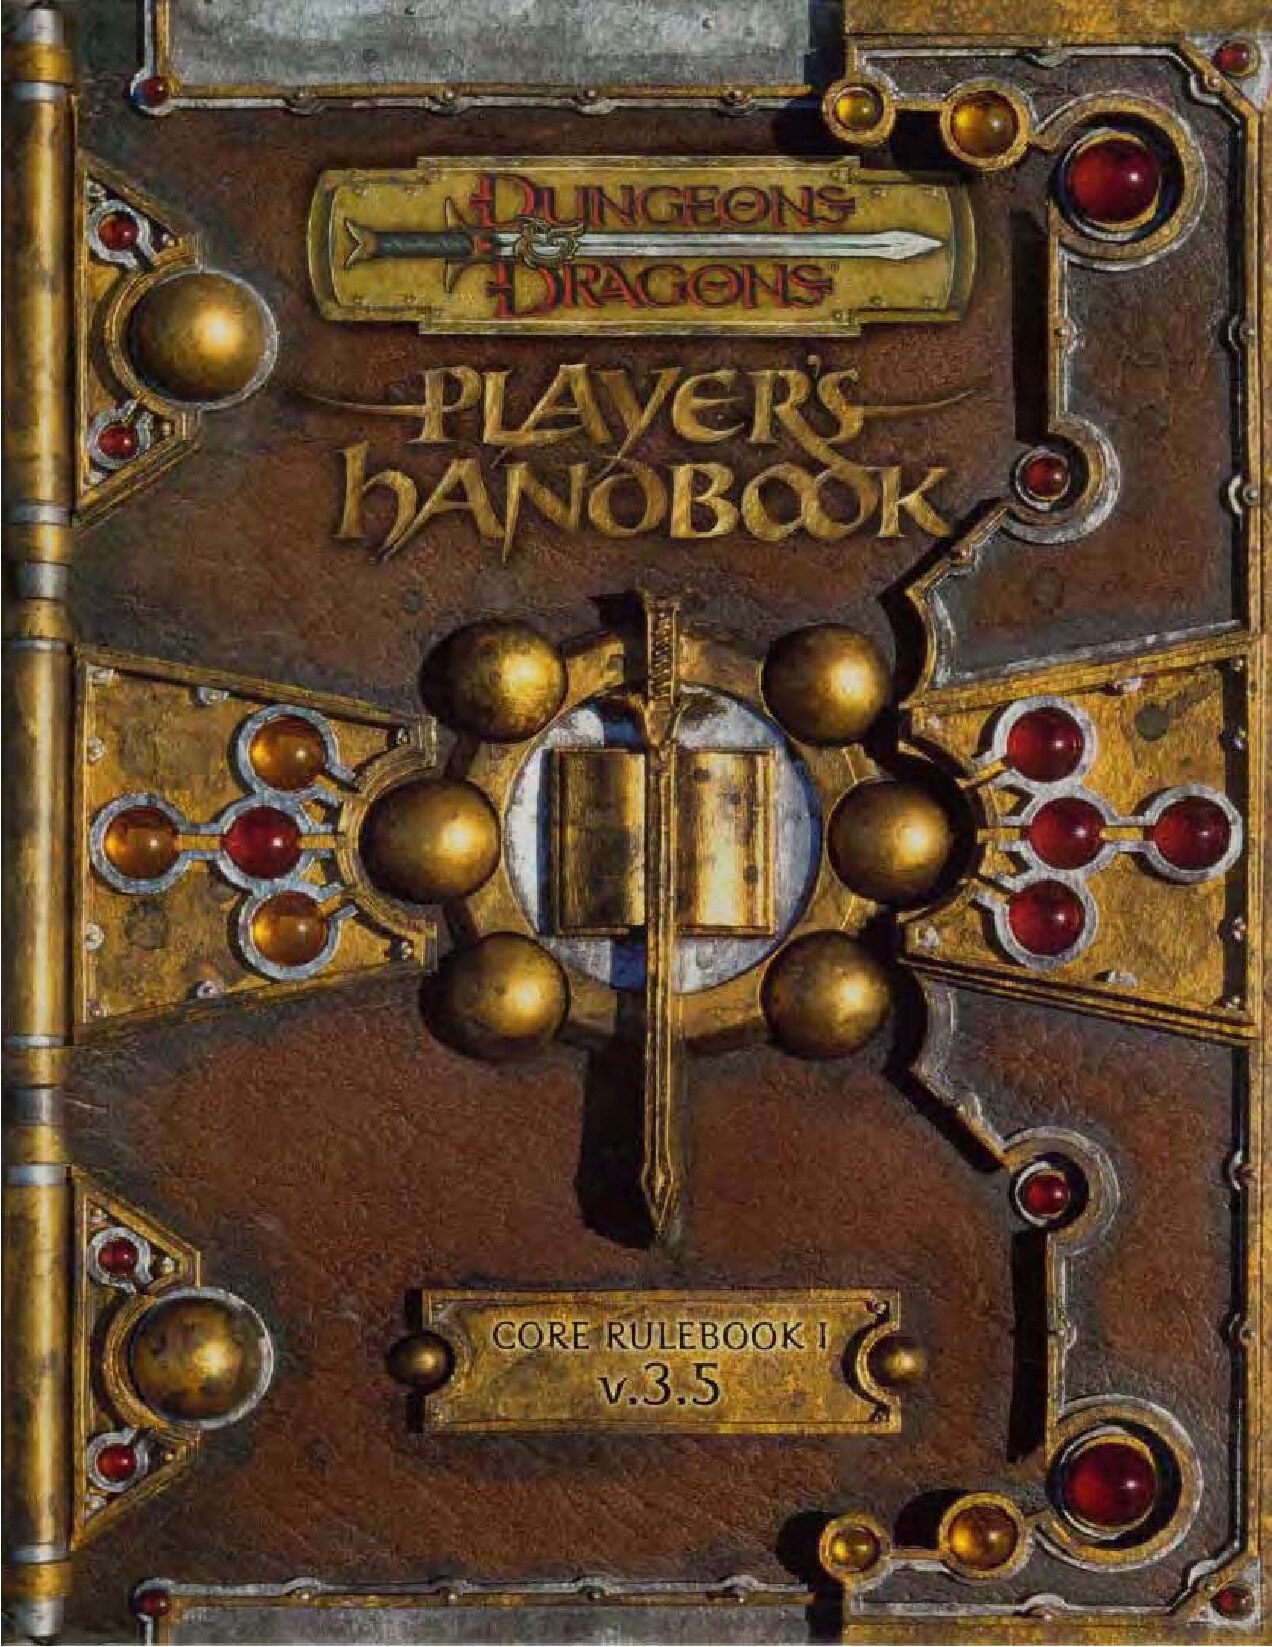 Player's Handbook. Core Rulebook I v.3.5